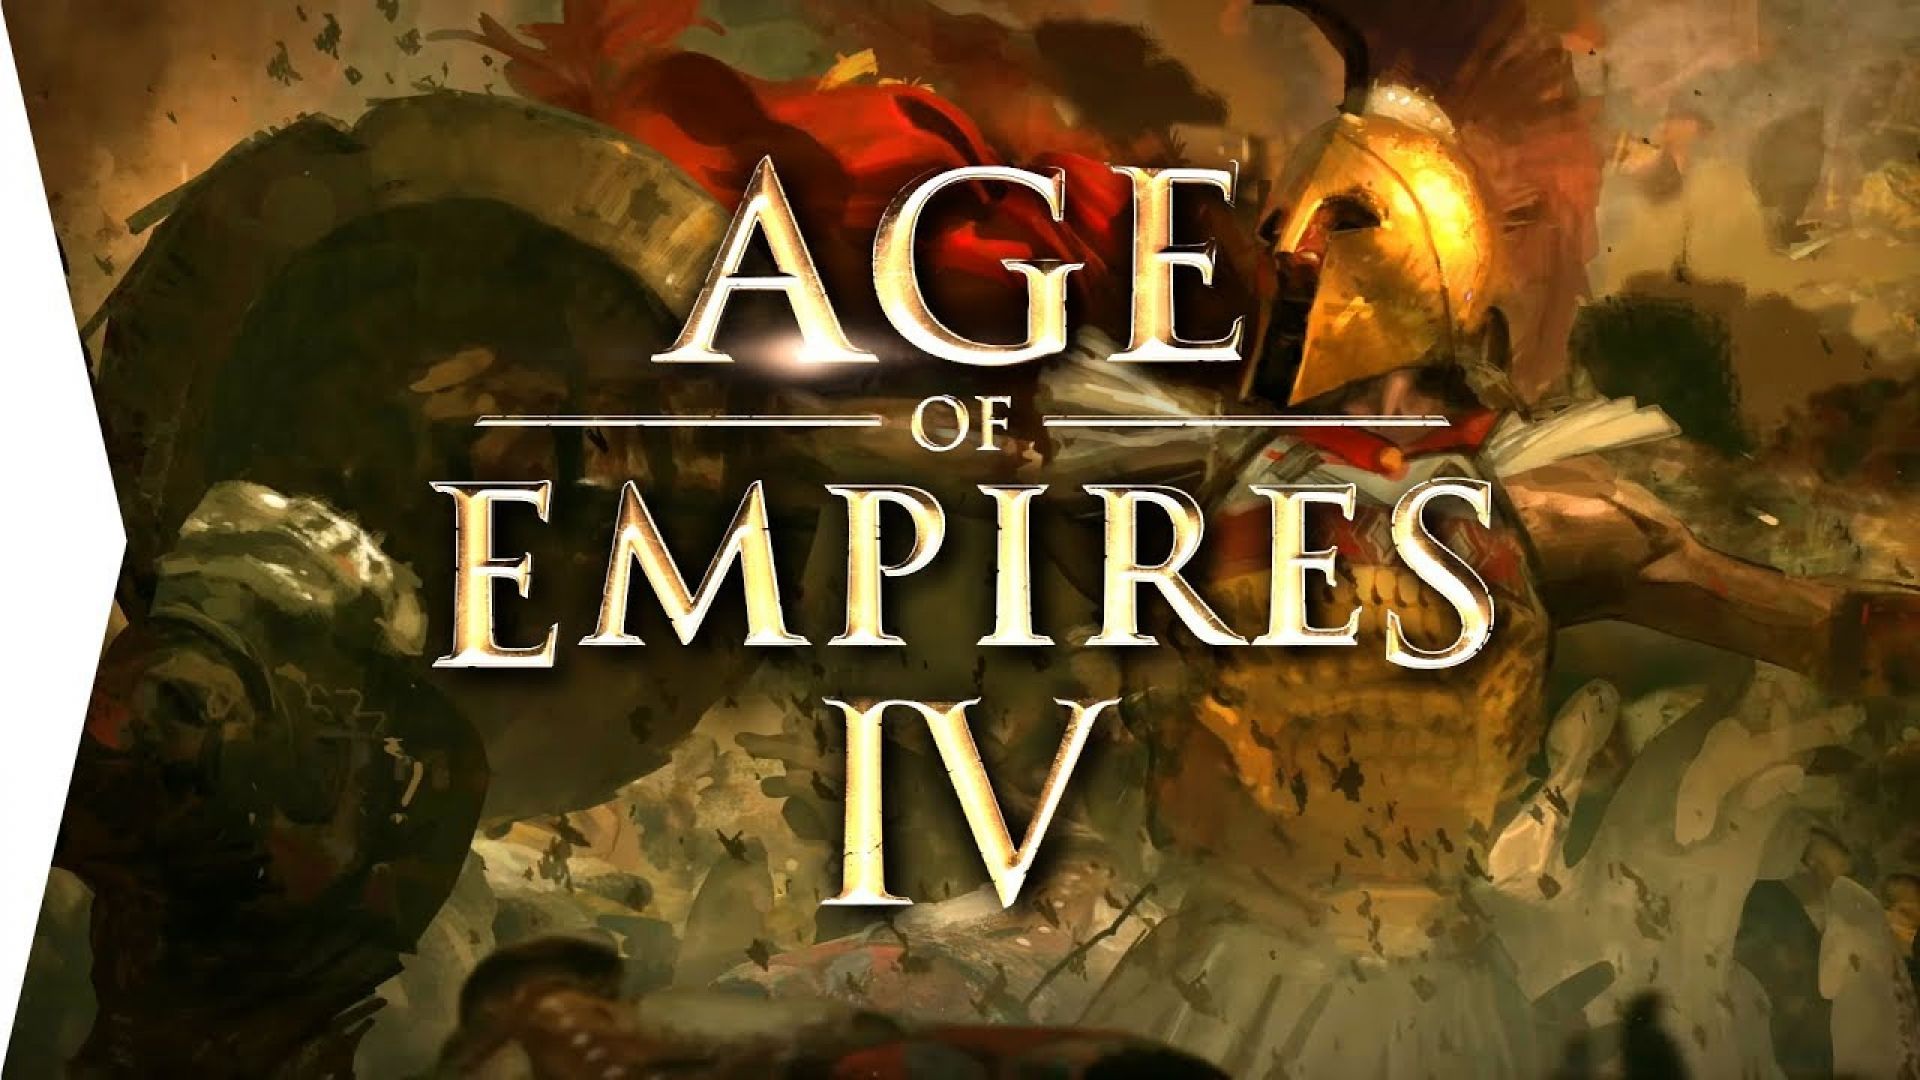 Age of Empires IV възражда историческите стратегии